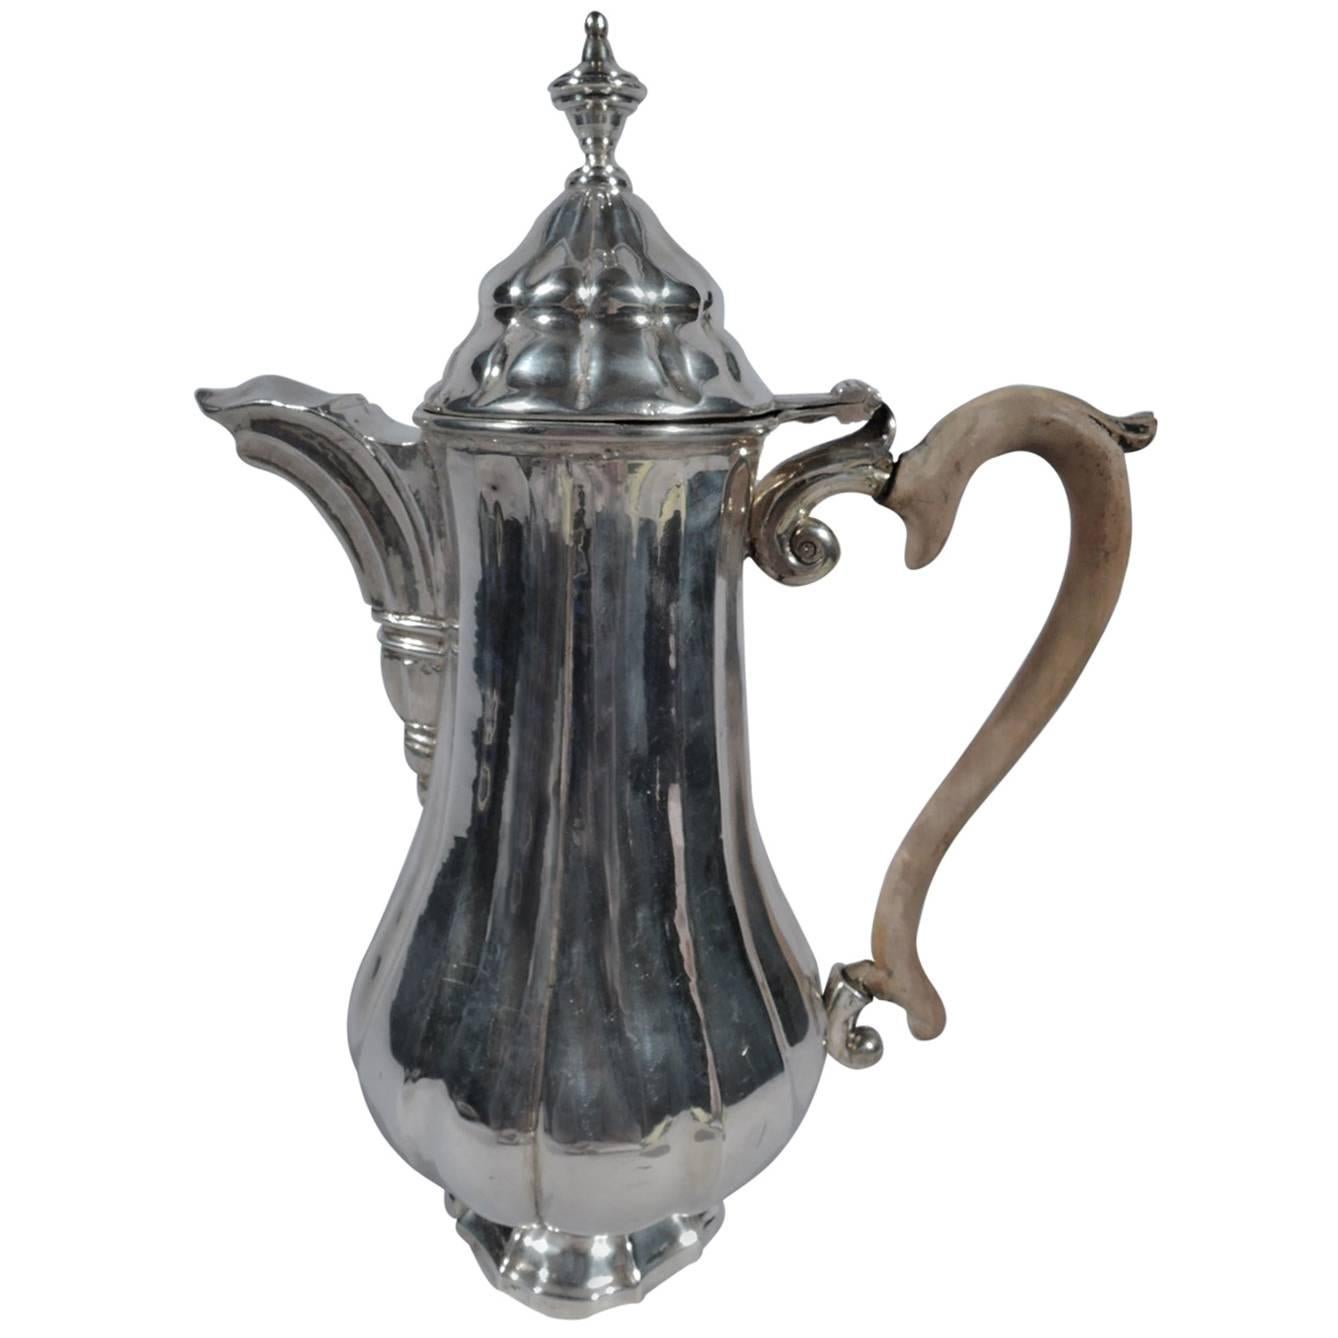 Antique Italian Silver Coffeepot in 18th Century Style